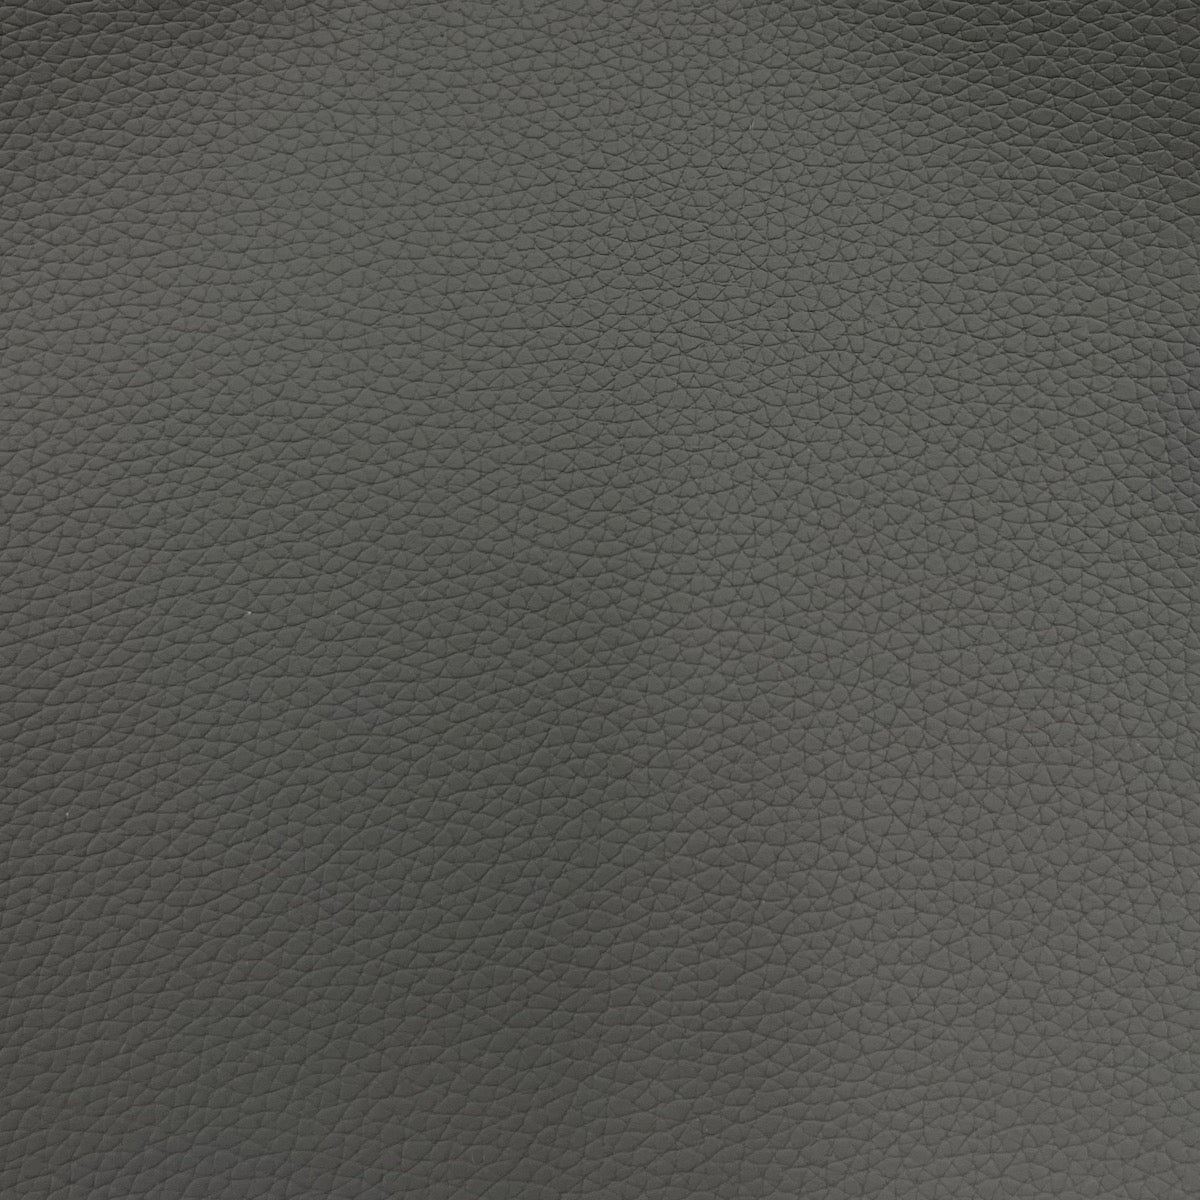 Slate Gray Pebble Grain Textured Faux Leather Vinyl Fabric